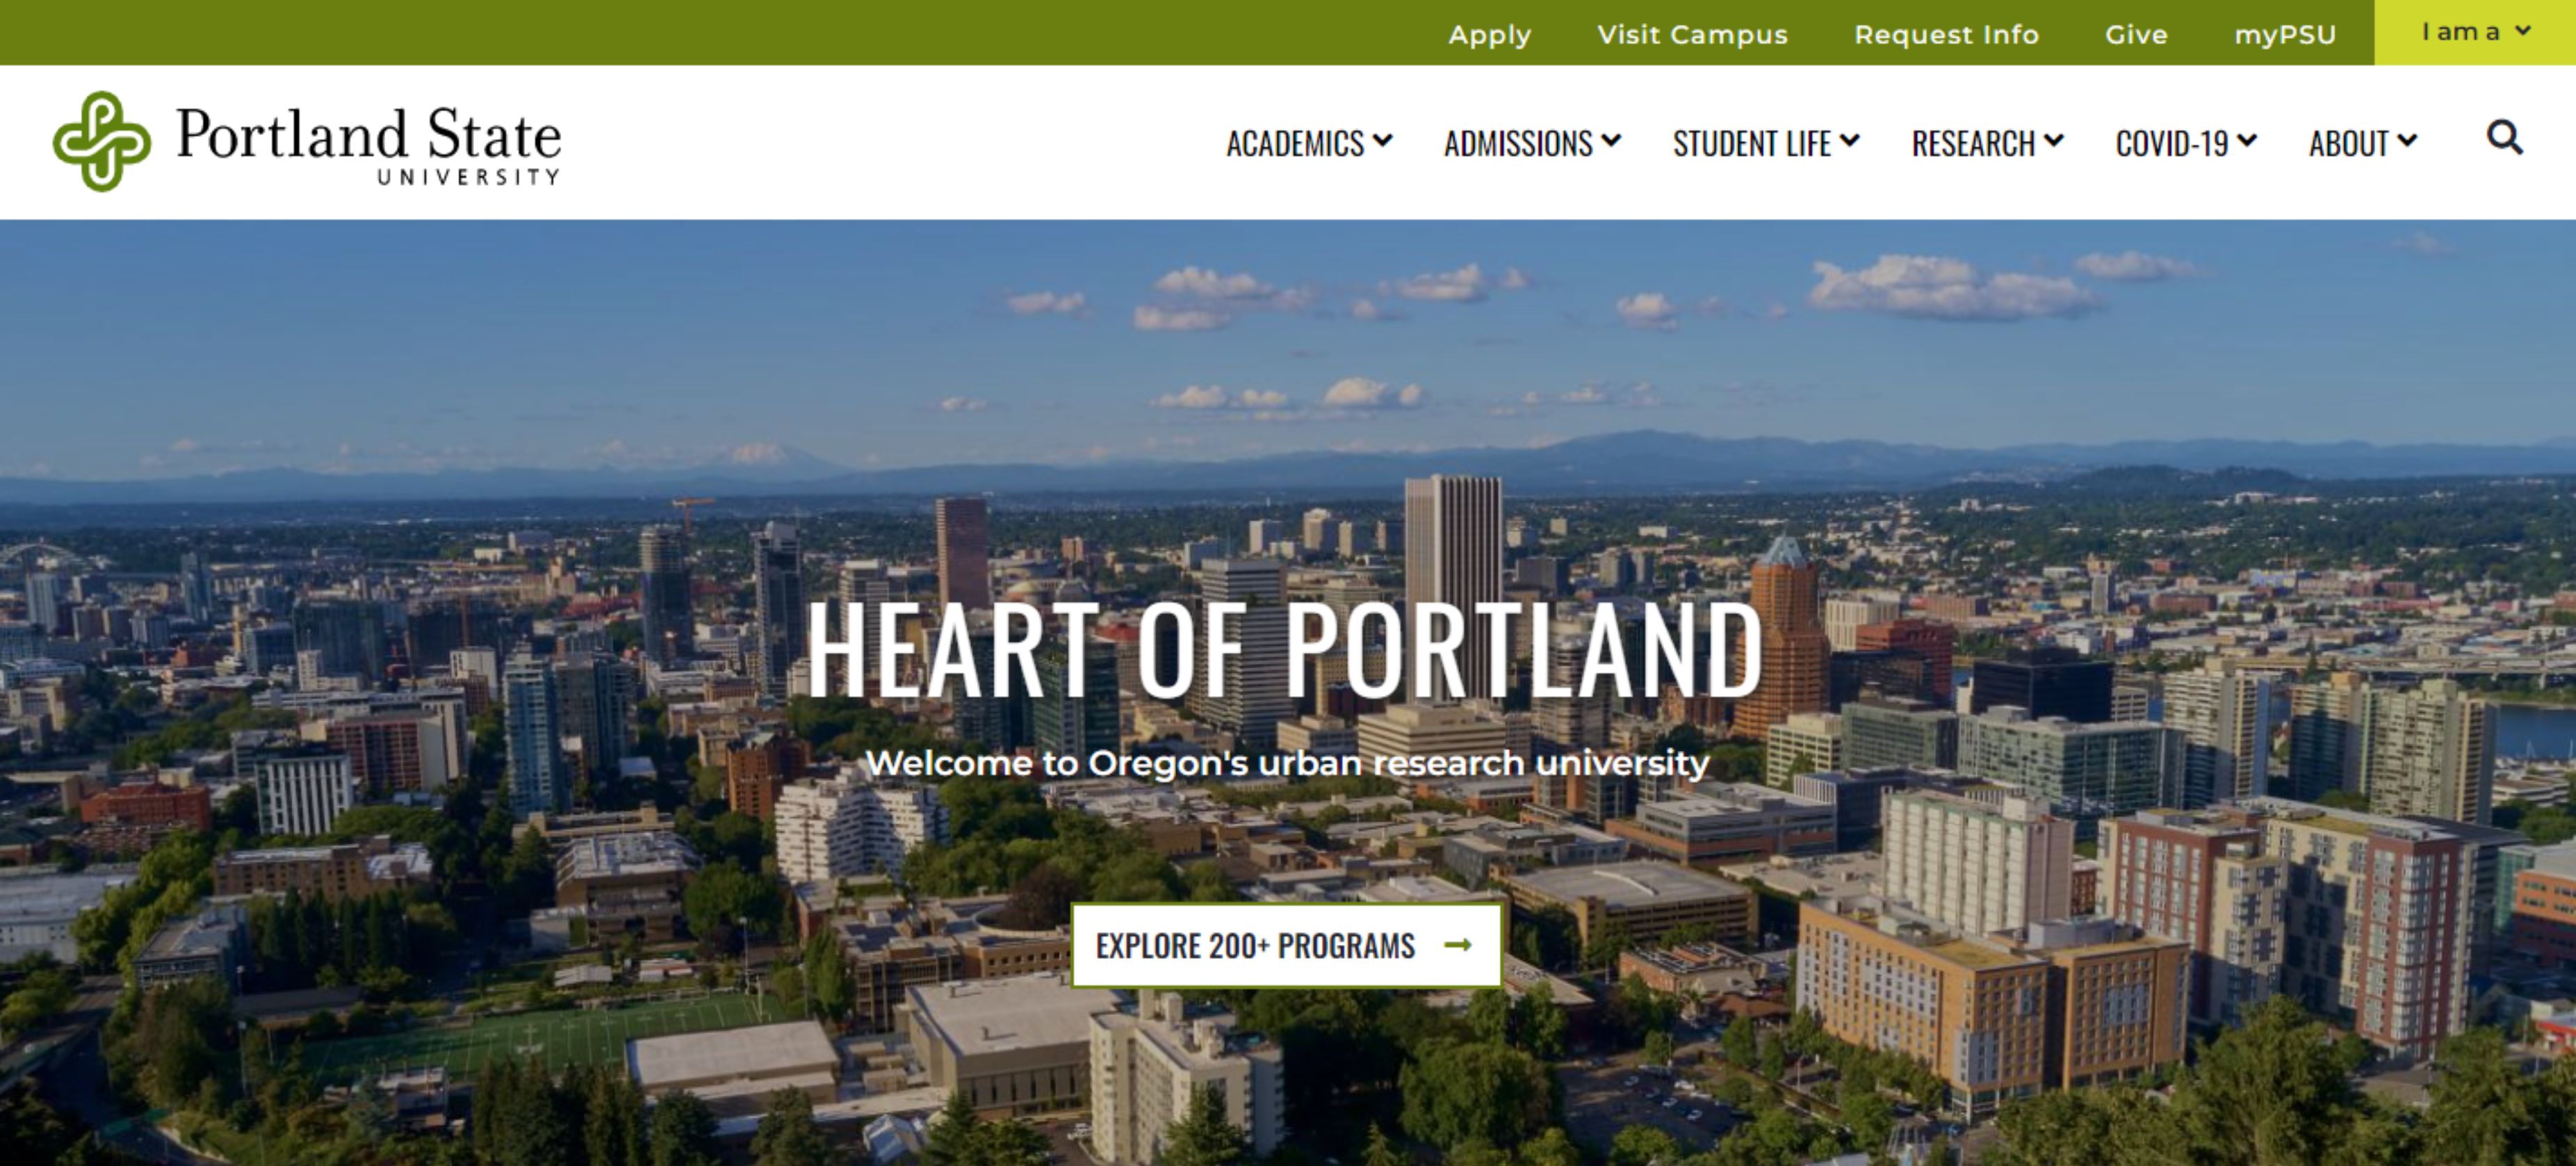 Portland State University homepage header